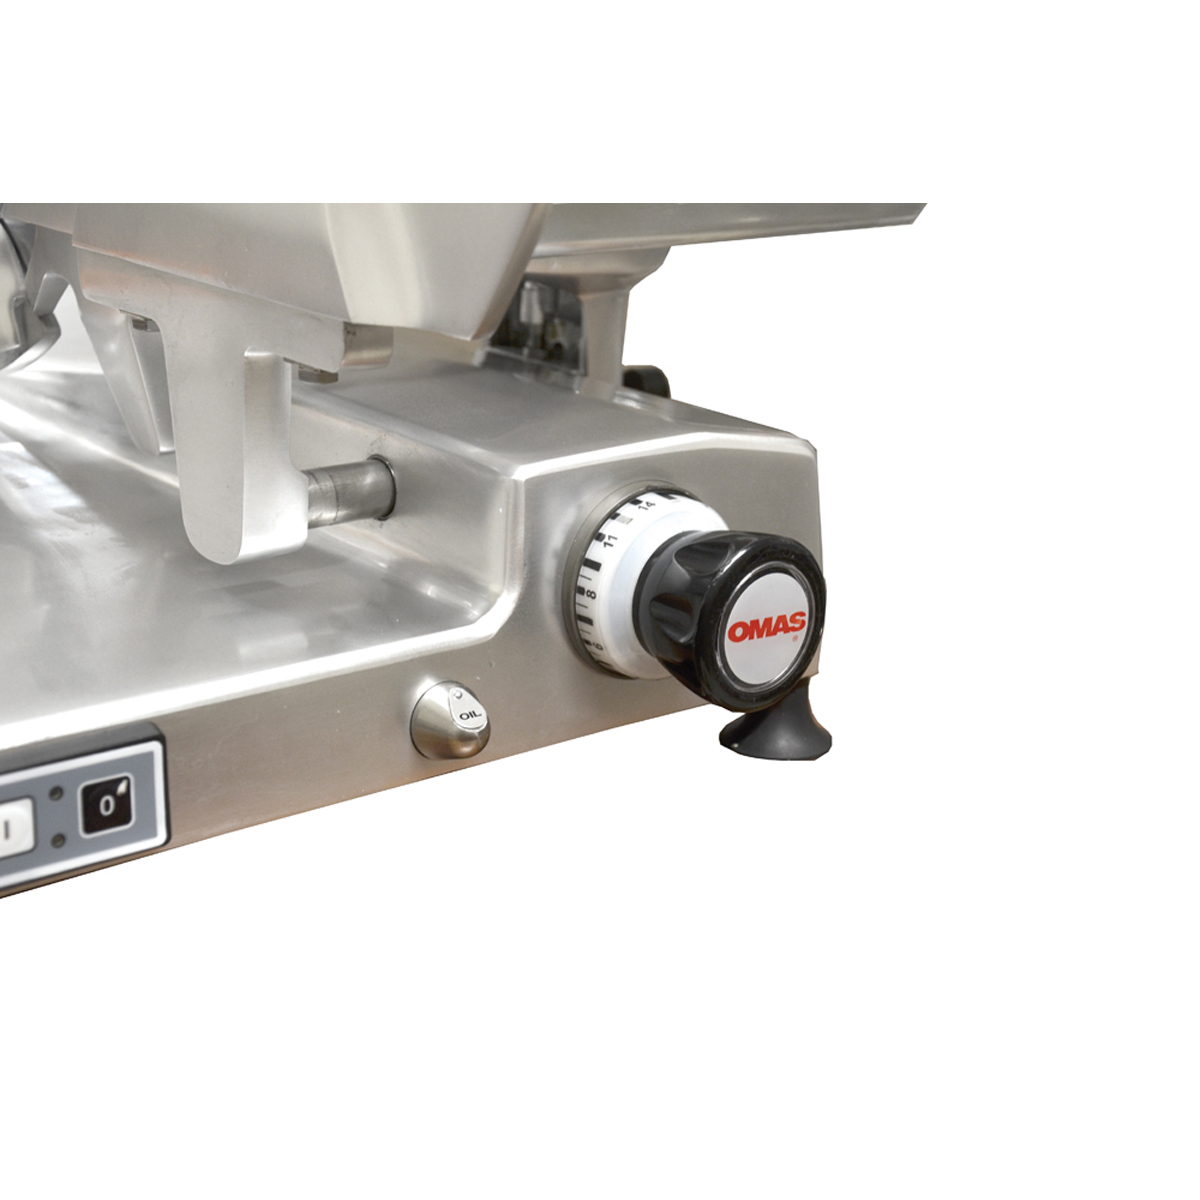 Omcan 44006 12 5/16" Horizontal Gear-Driven Slicer 110V, 0.40 HP image 4